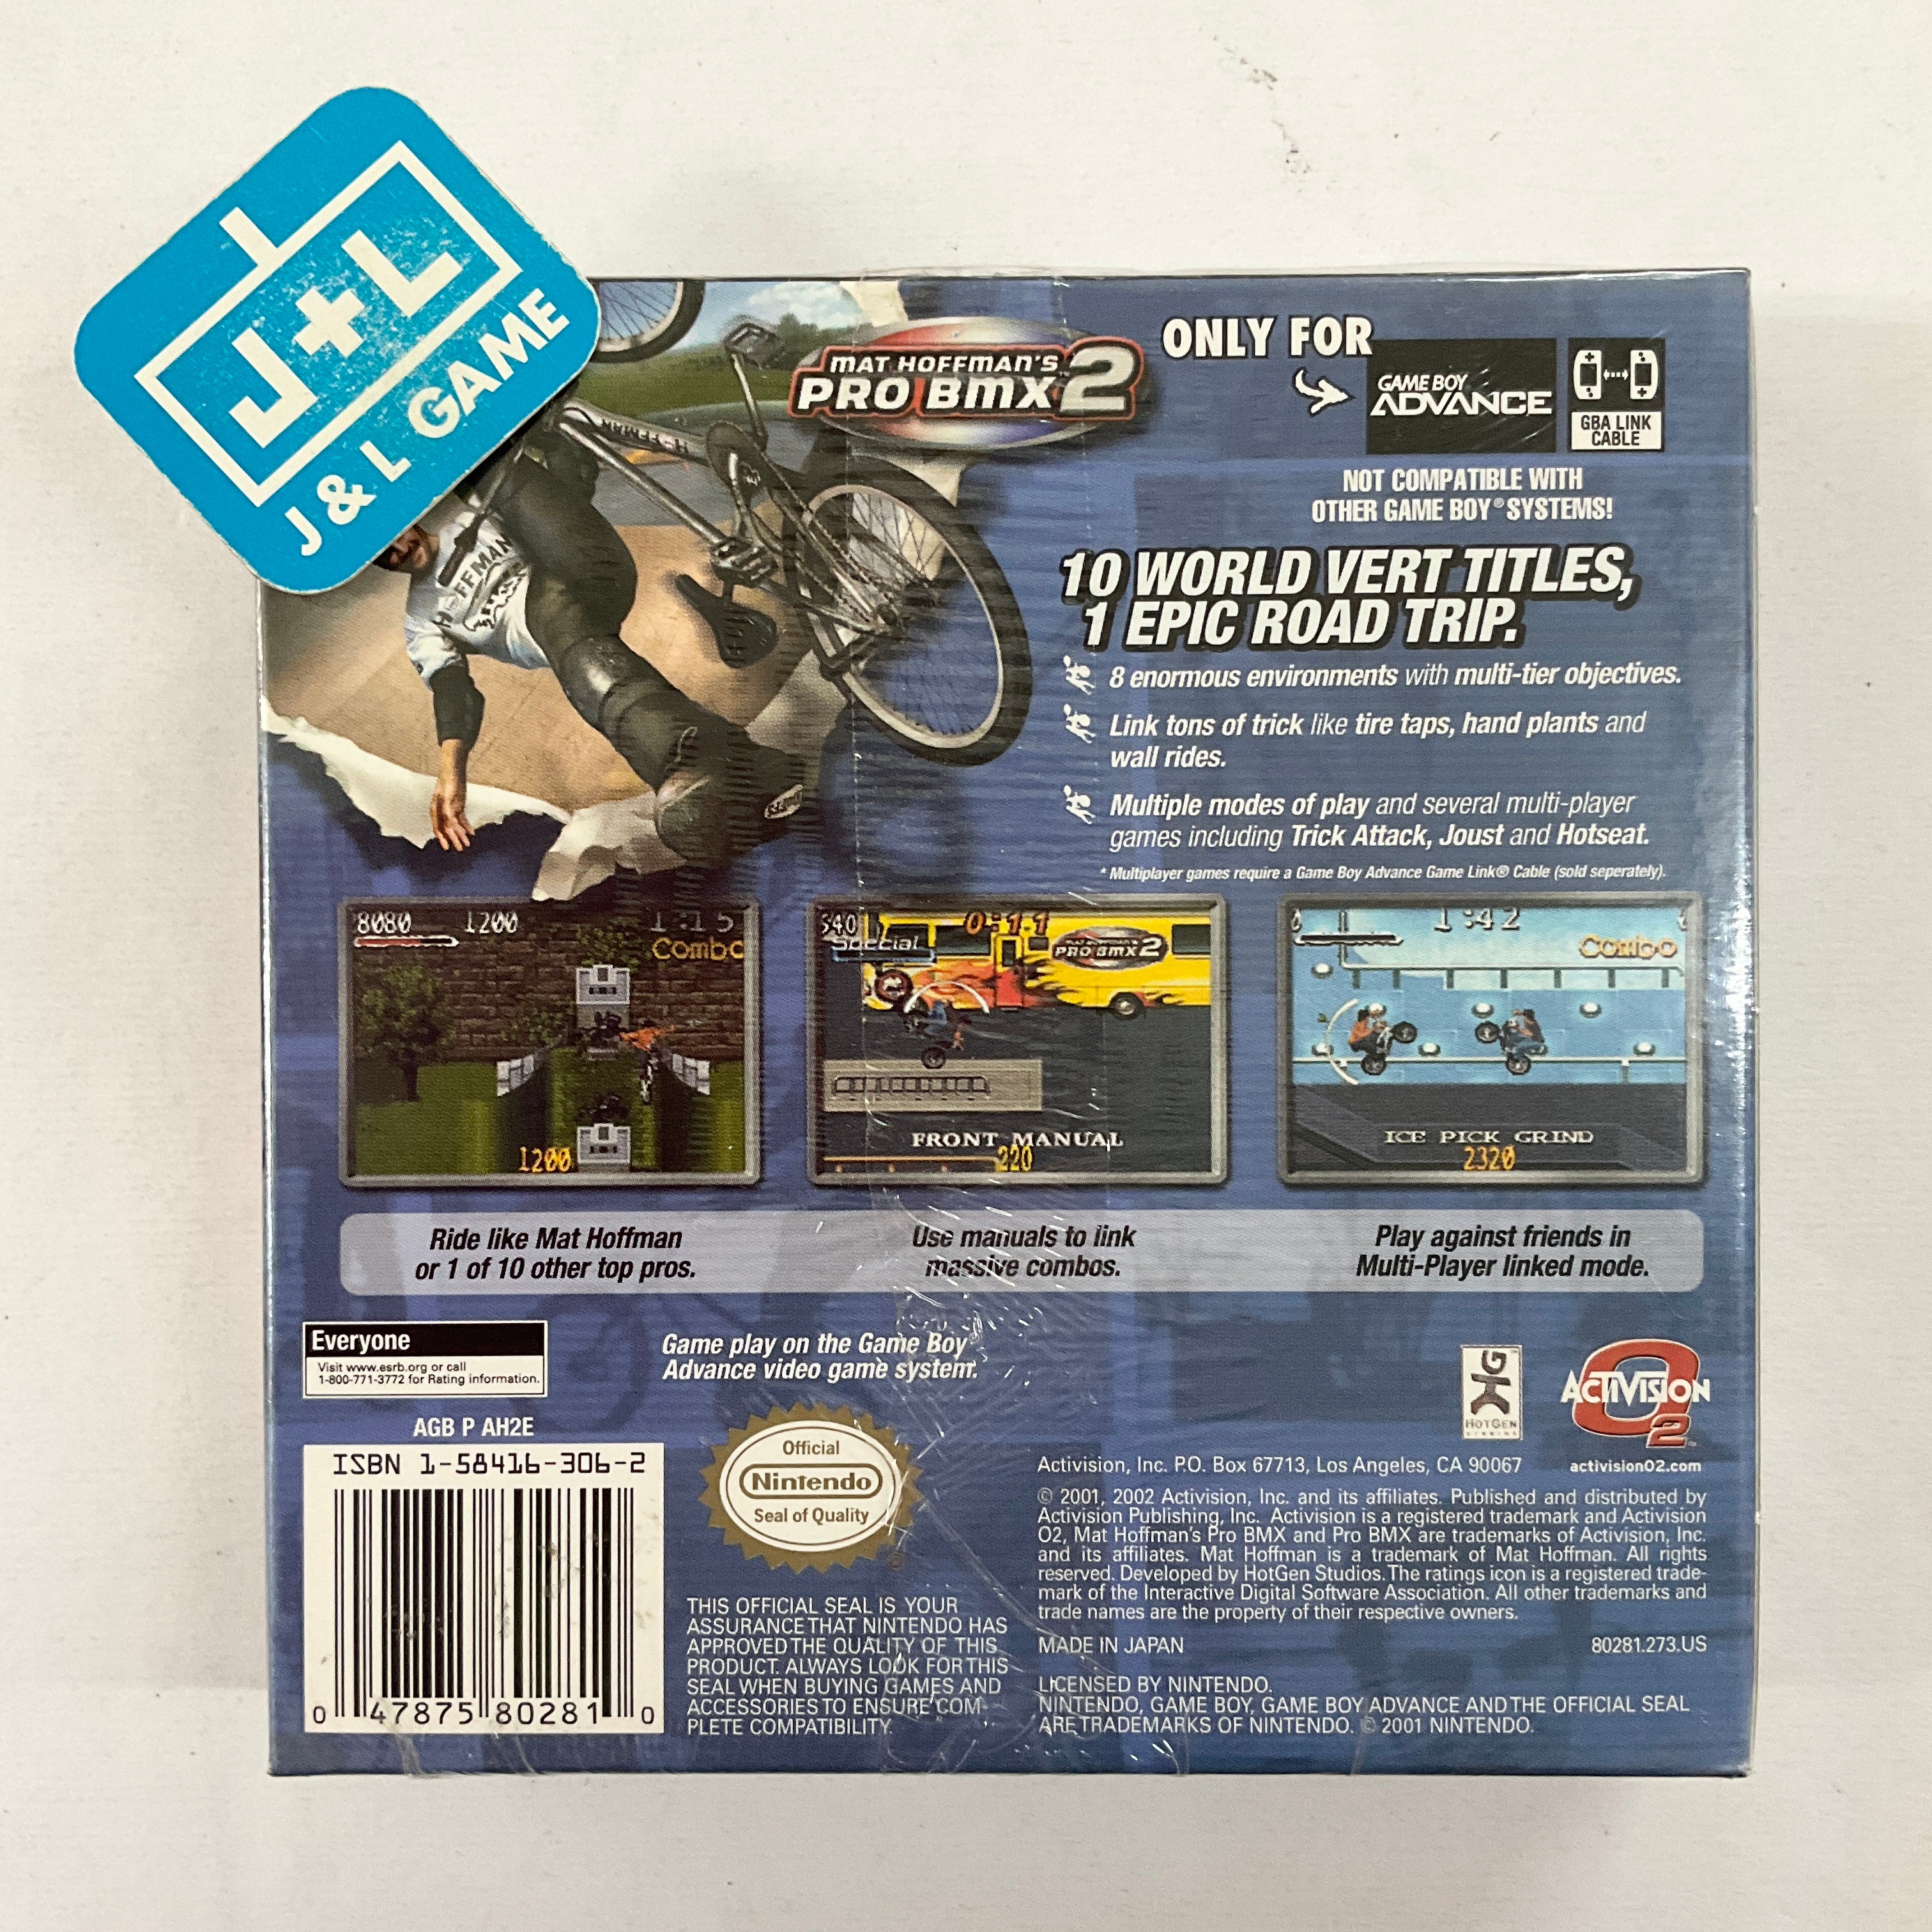 Mat Hoffman's Pro BMX 2 - (GBA) Game Boy Advance Video Games Activision   